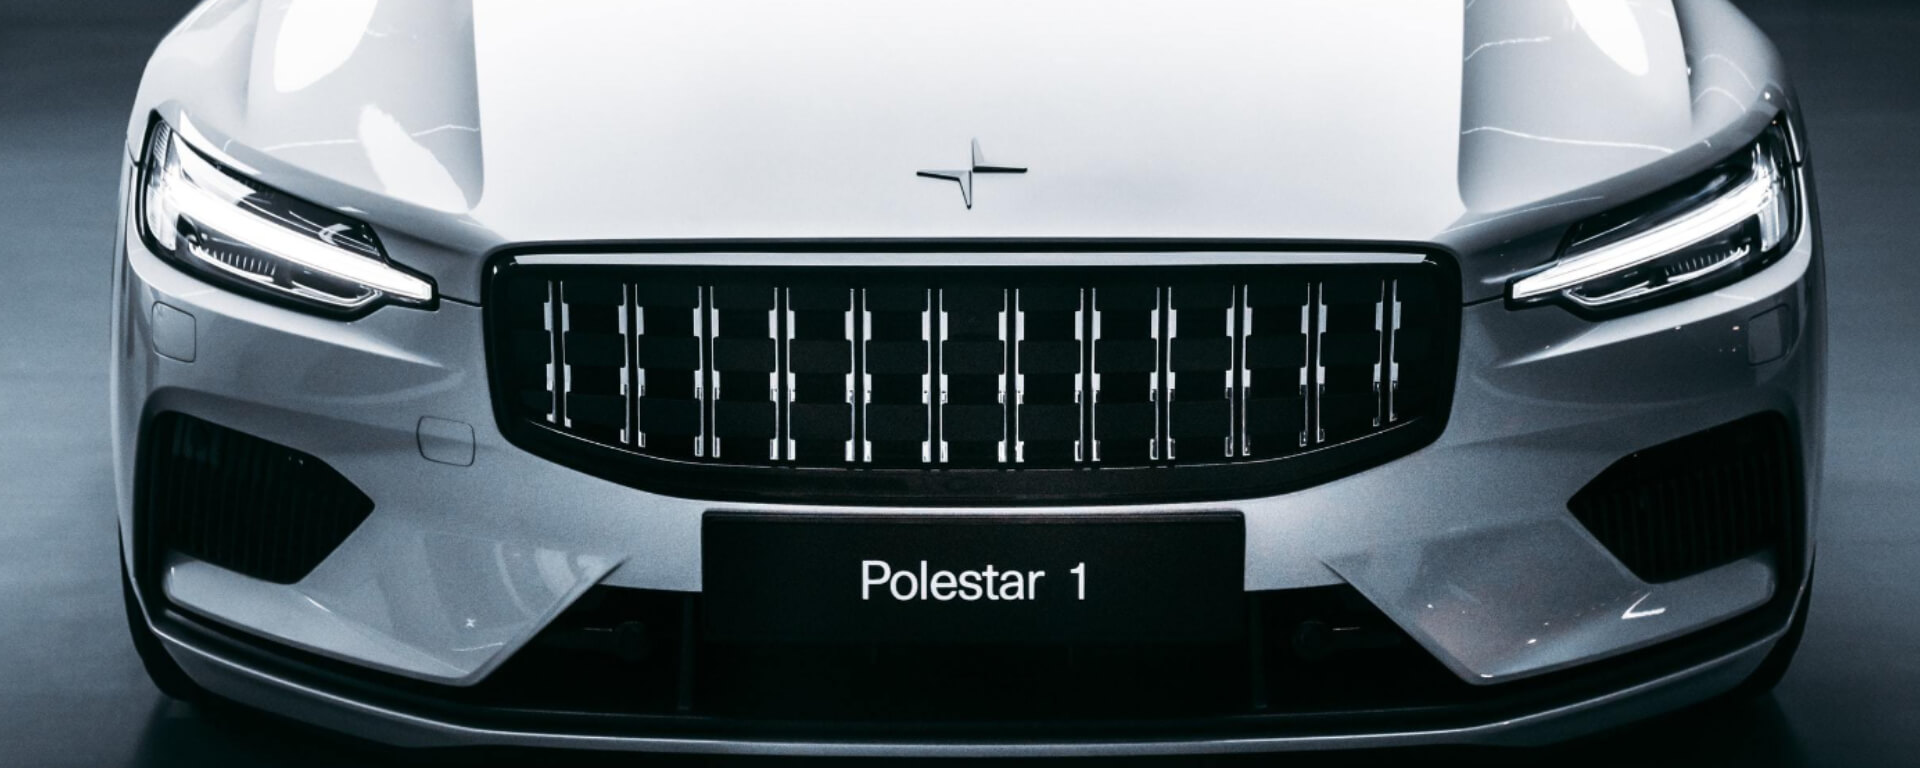 Polestar 1 Car Insurance